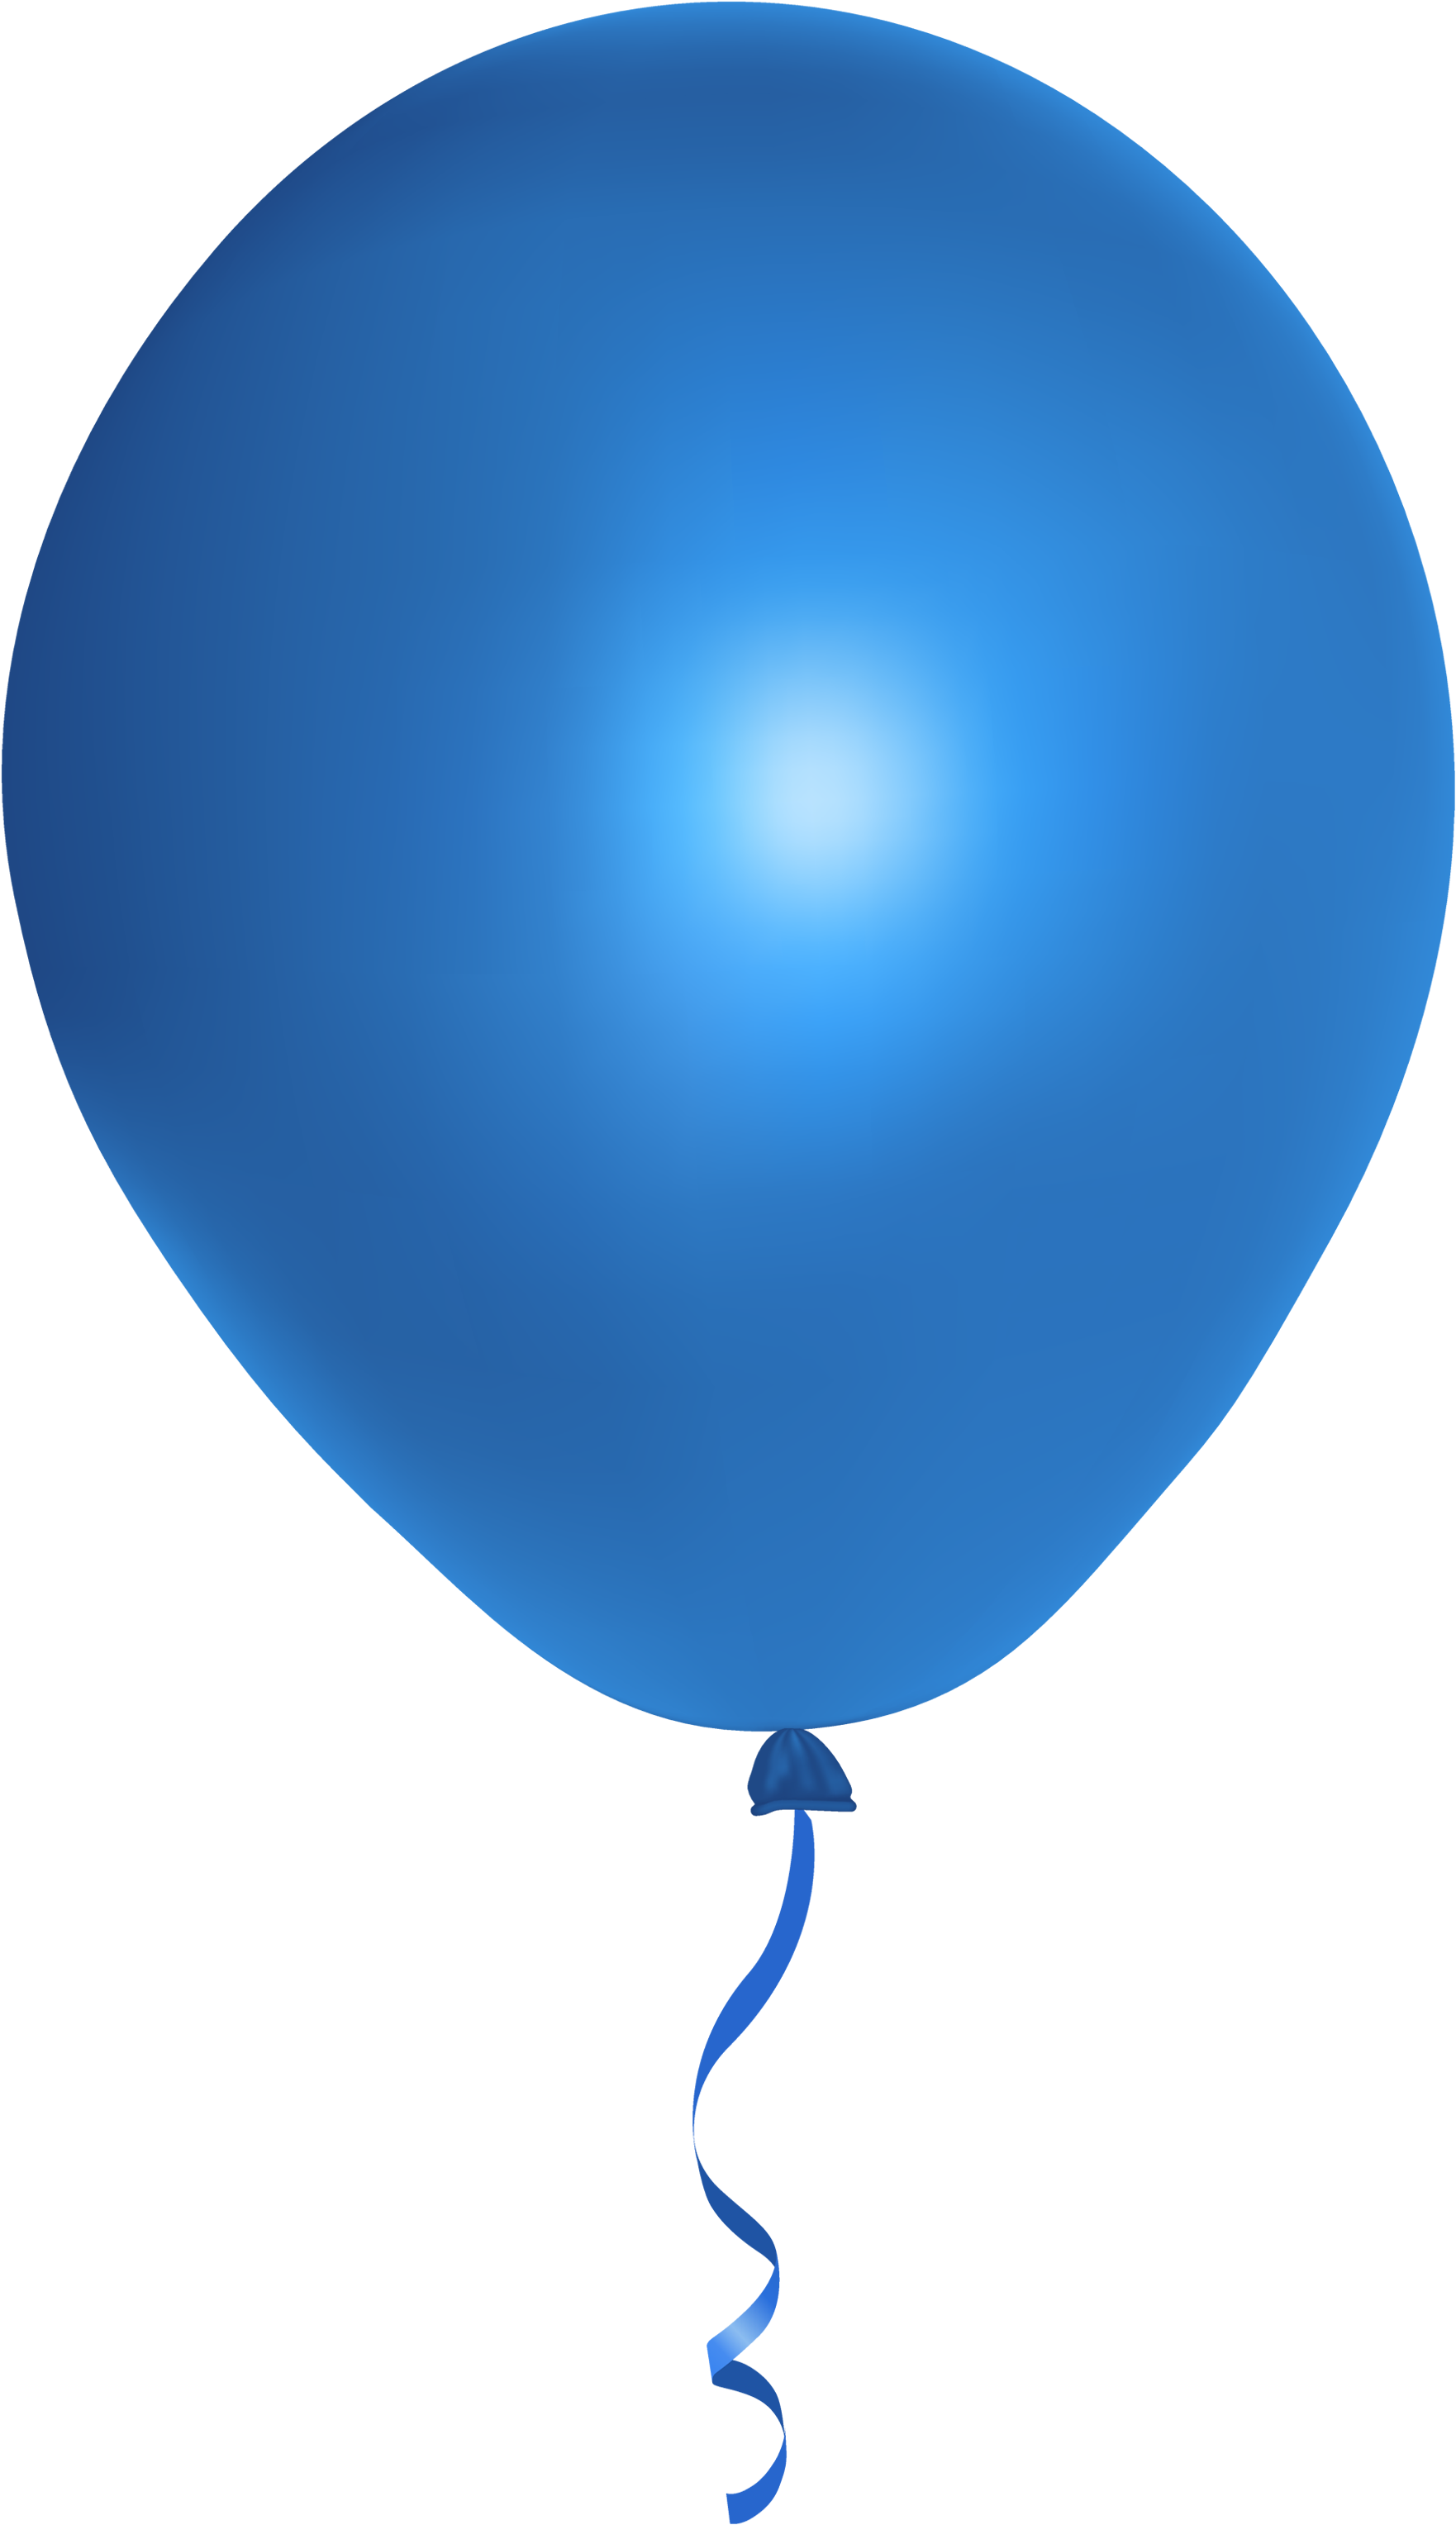 Картинка шар на прозрачном фоне. Воздушный шарик. Синий воздушный шар. Голубой шарик. Синие шары воздушные.